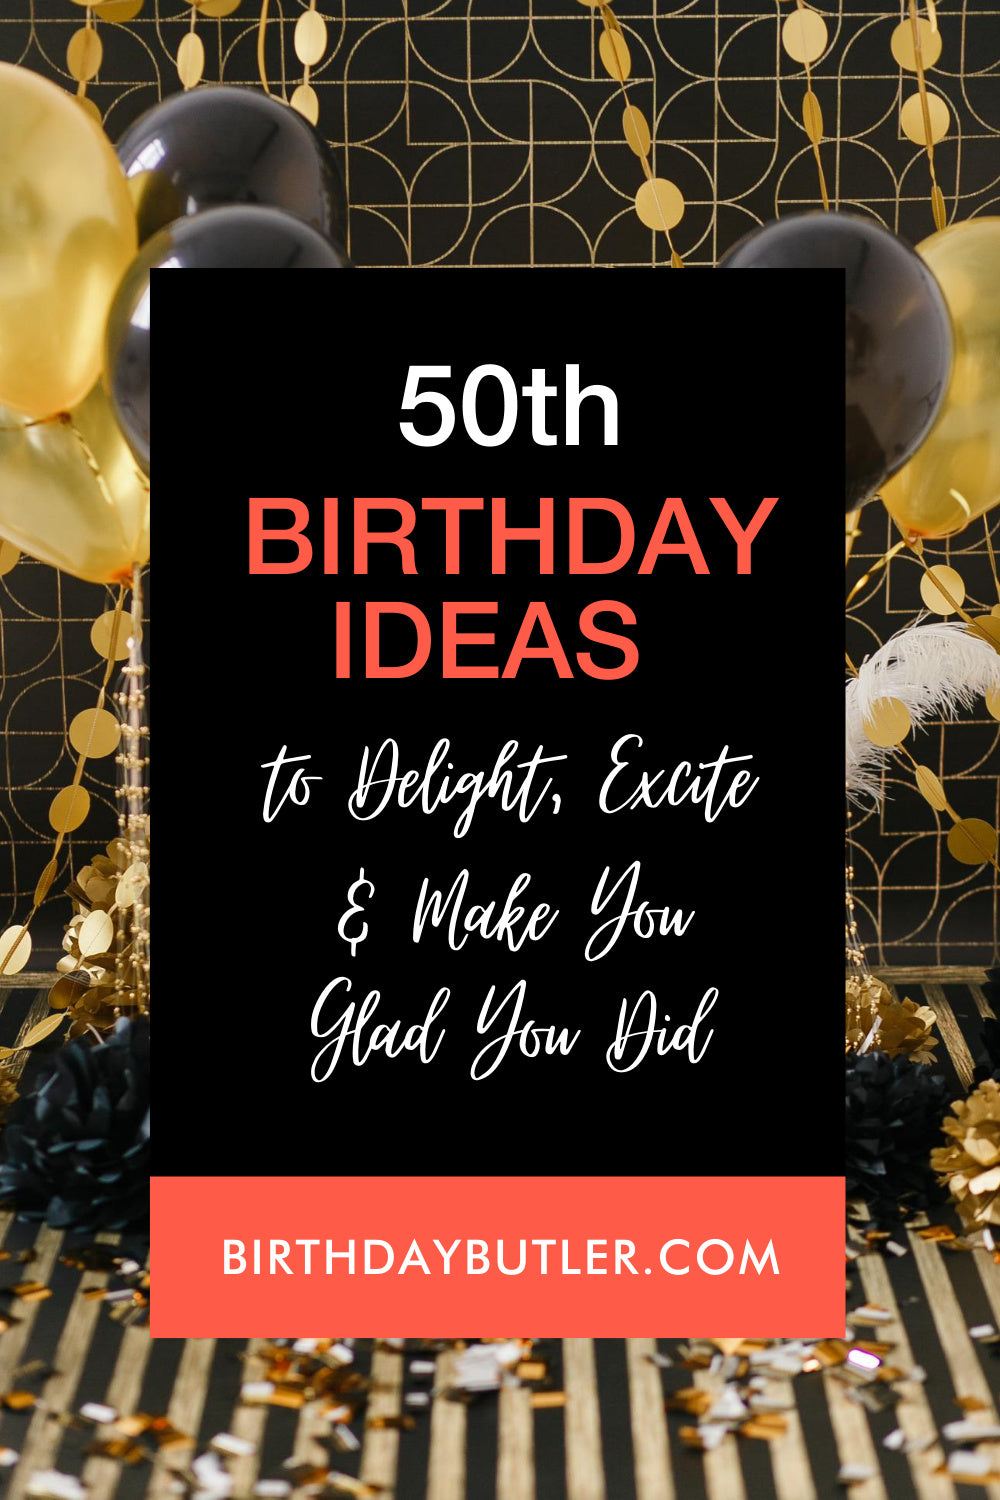 50th birthday celebration images